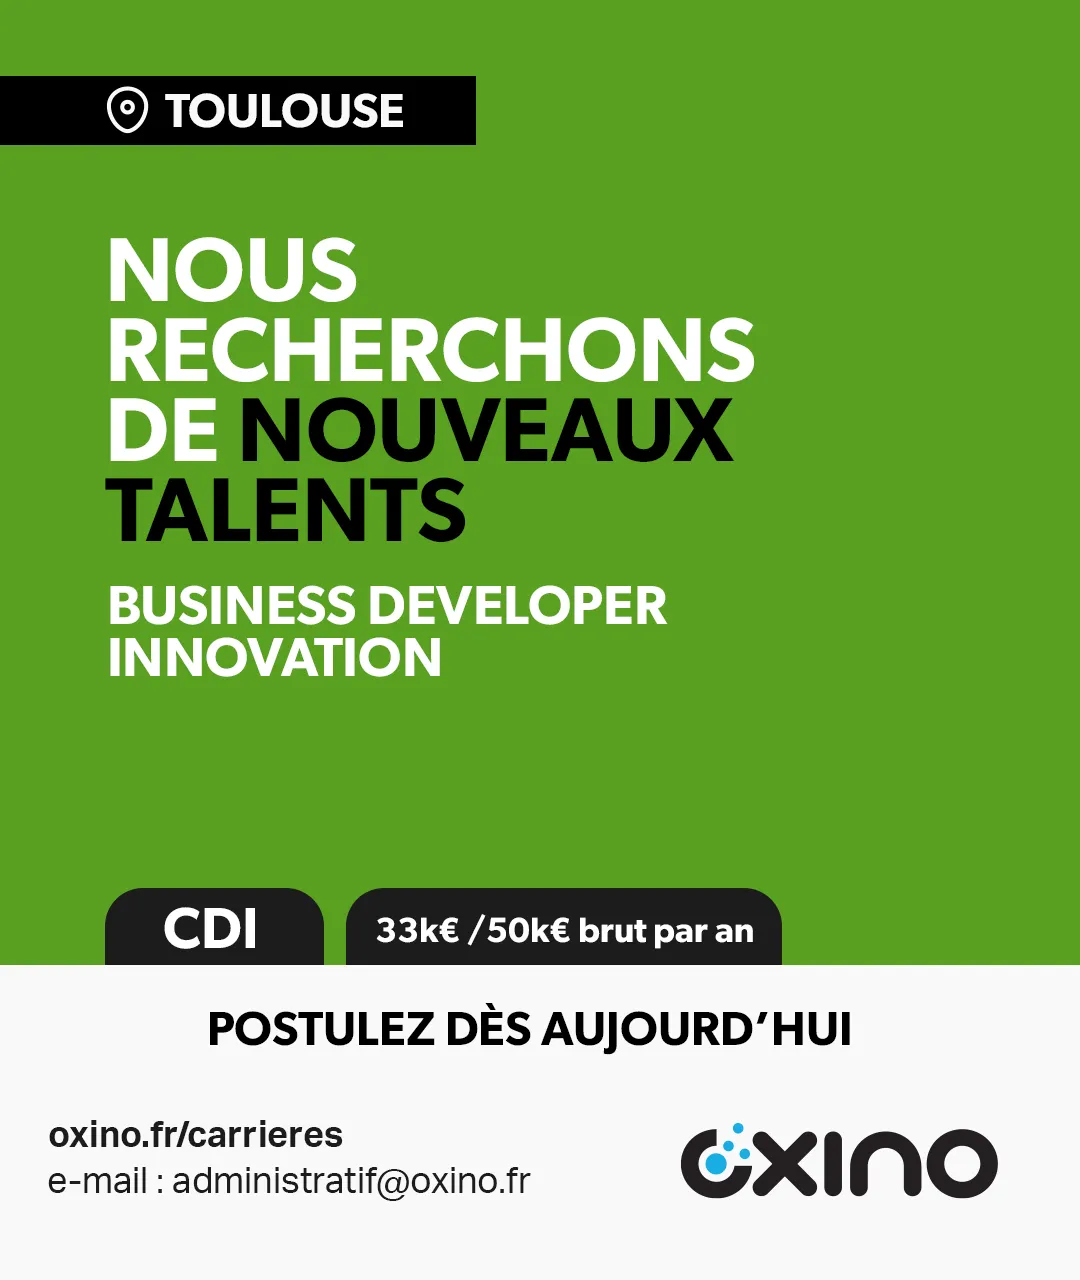 CDI - Business Developer Innovation Toulouse